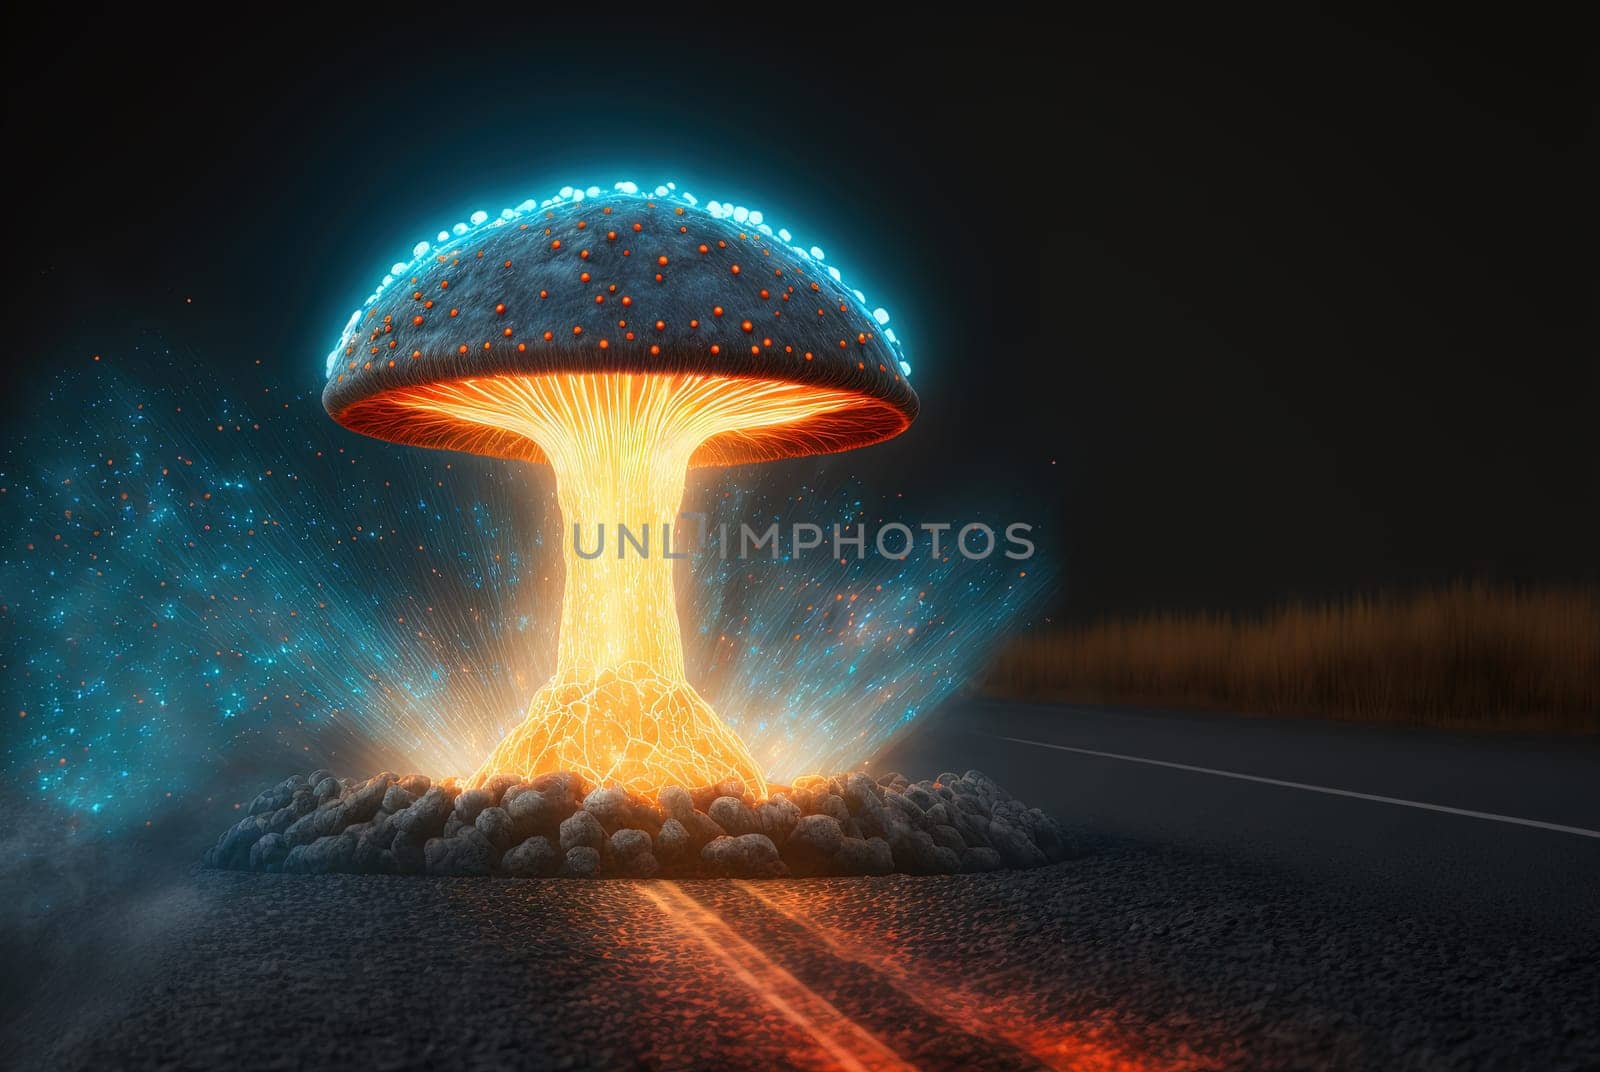 Mysterious sci-fi alien mushroom growing through the asphalt road. Generated AI